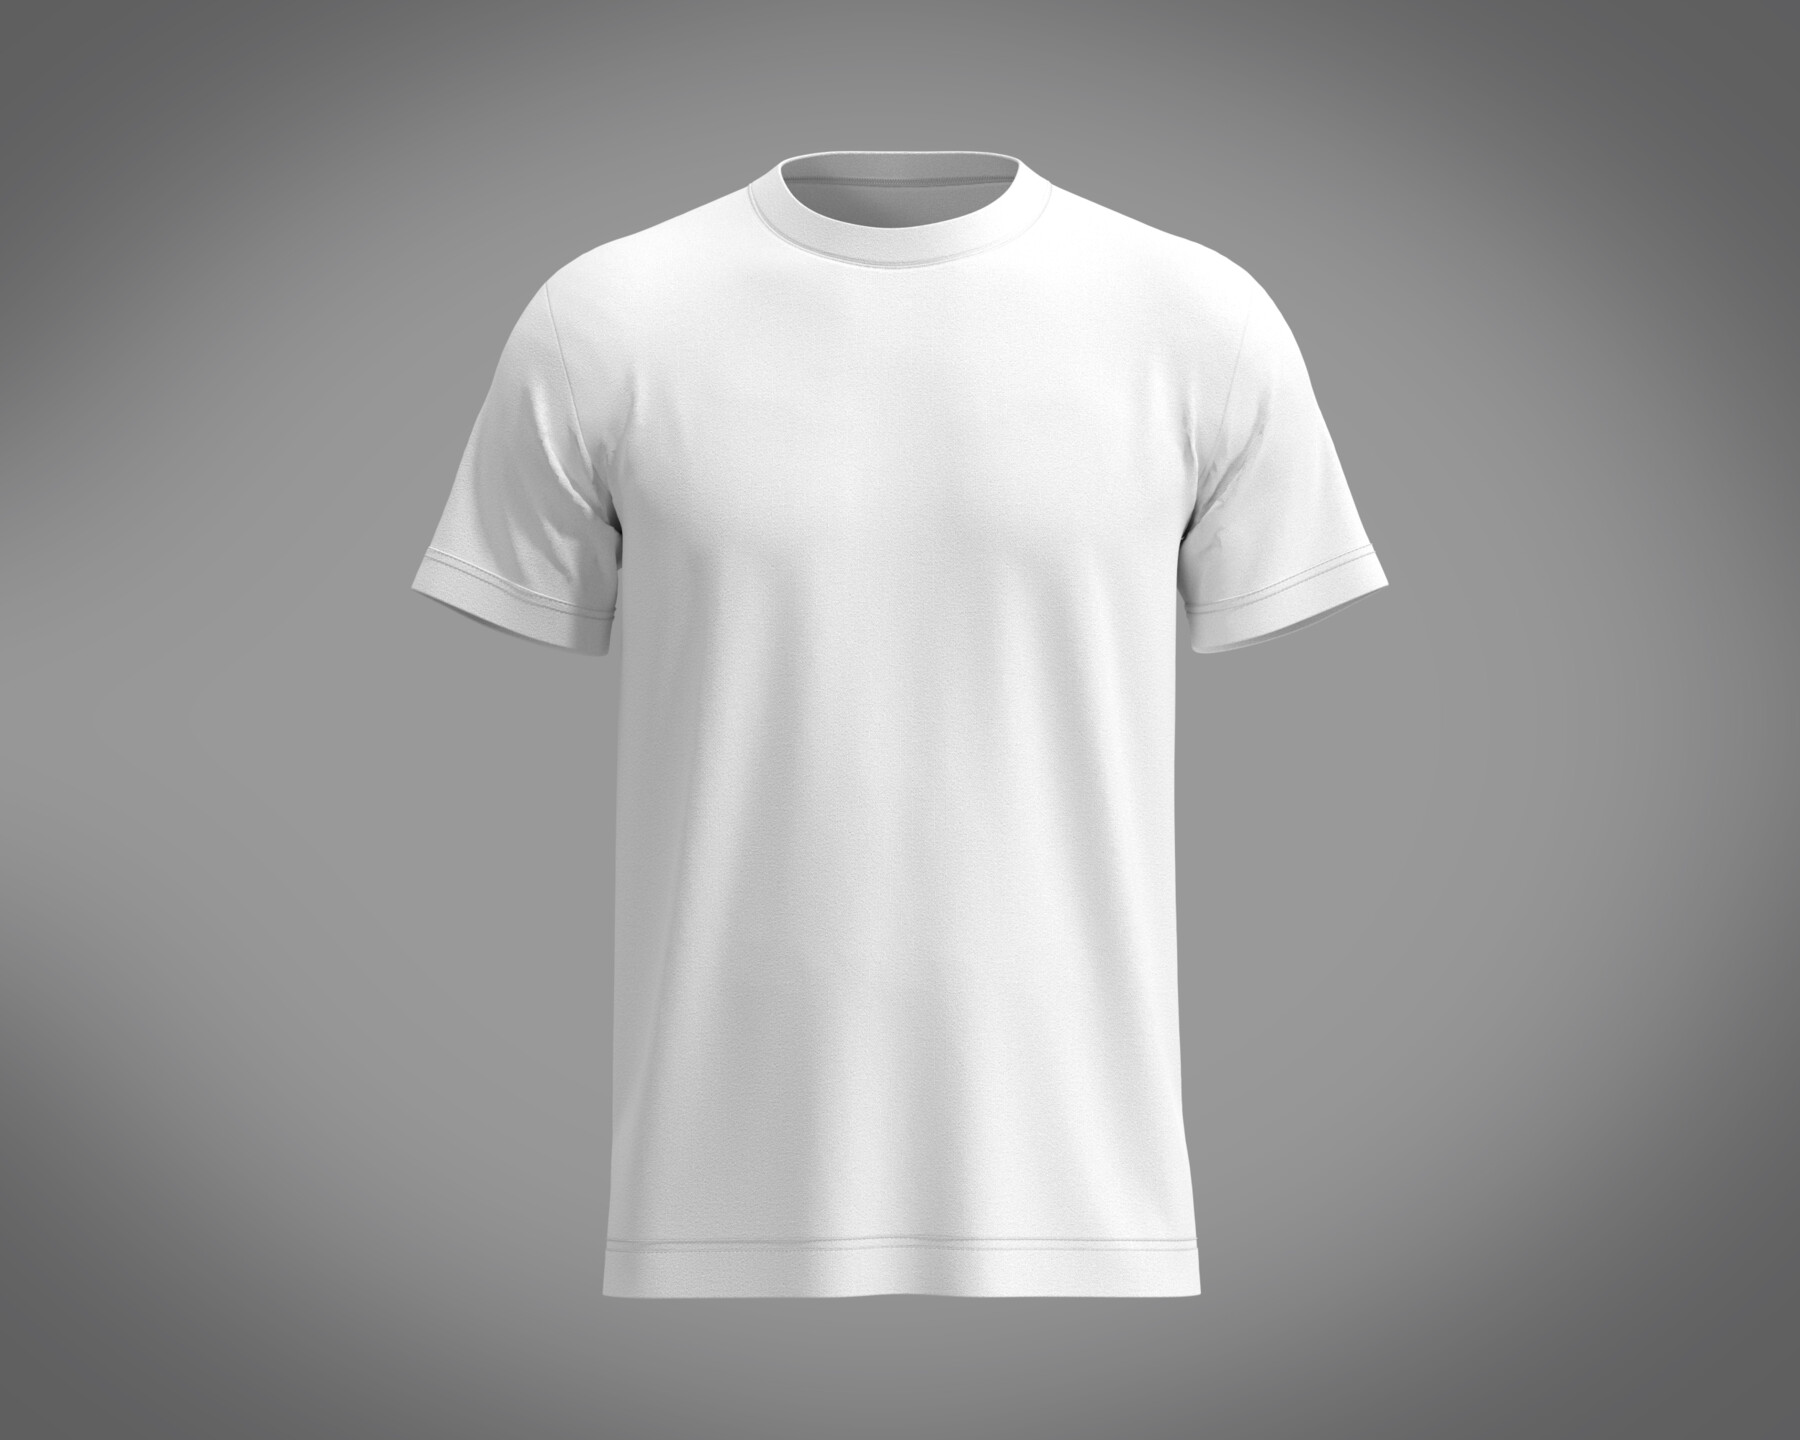 ArtStation - Regular Basic Tshirt | Resources